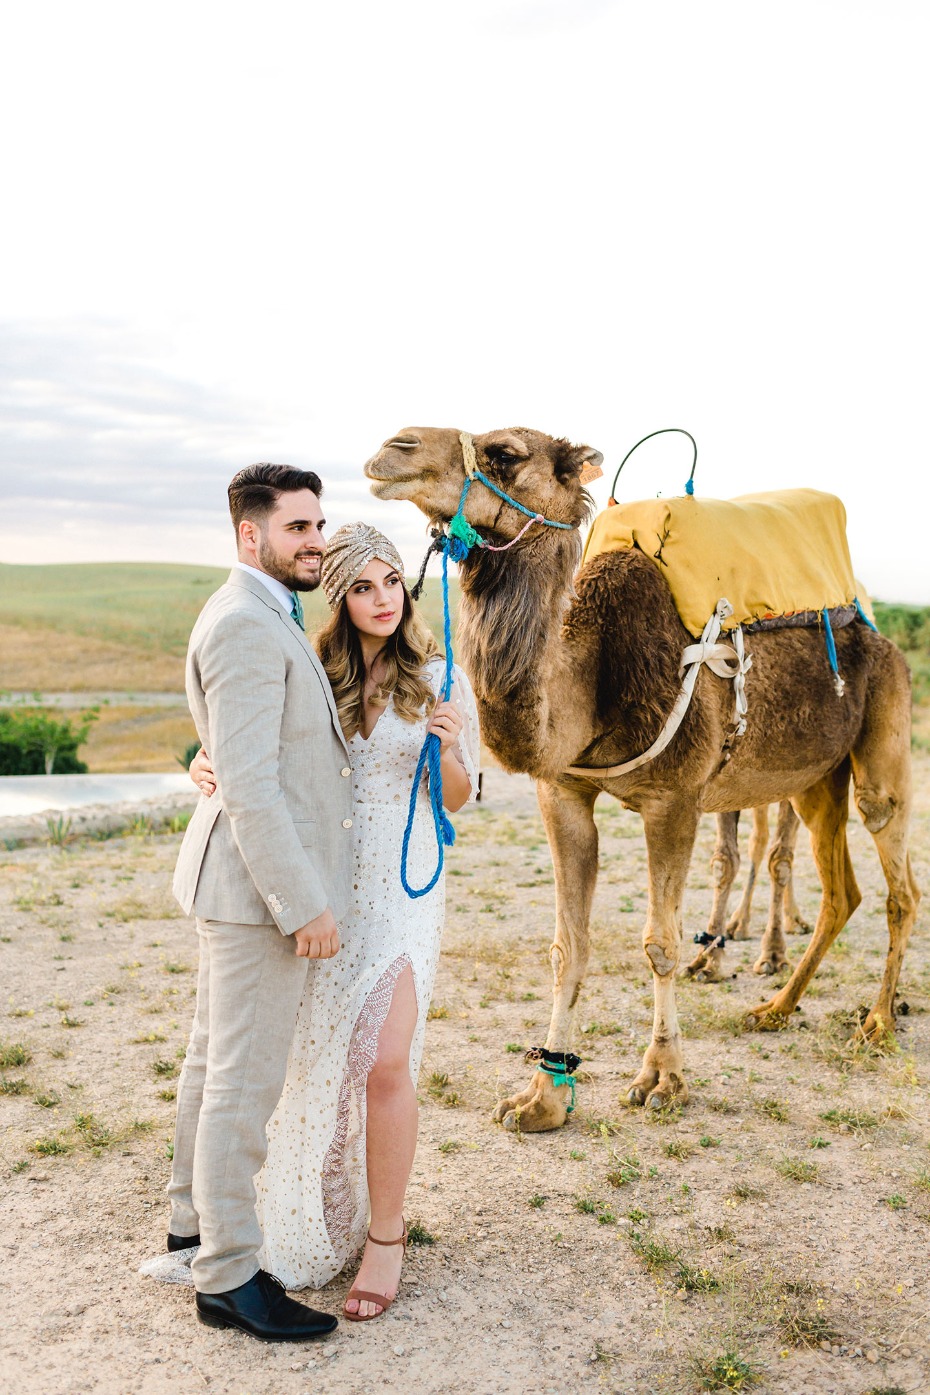 Moroccan wedding ideas